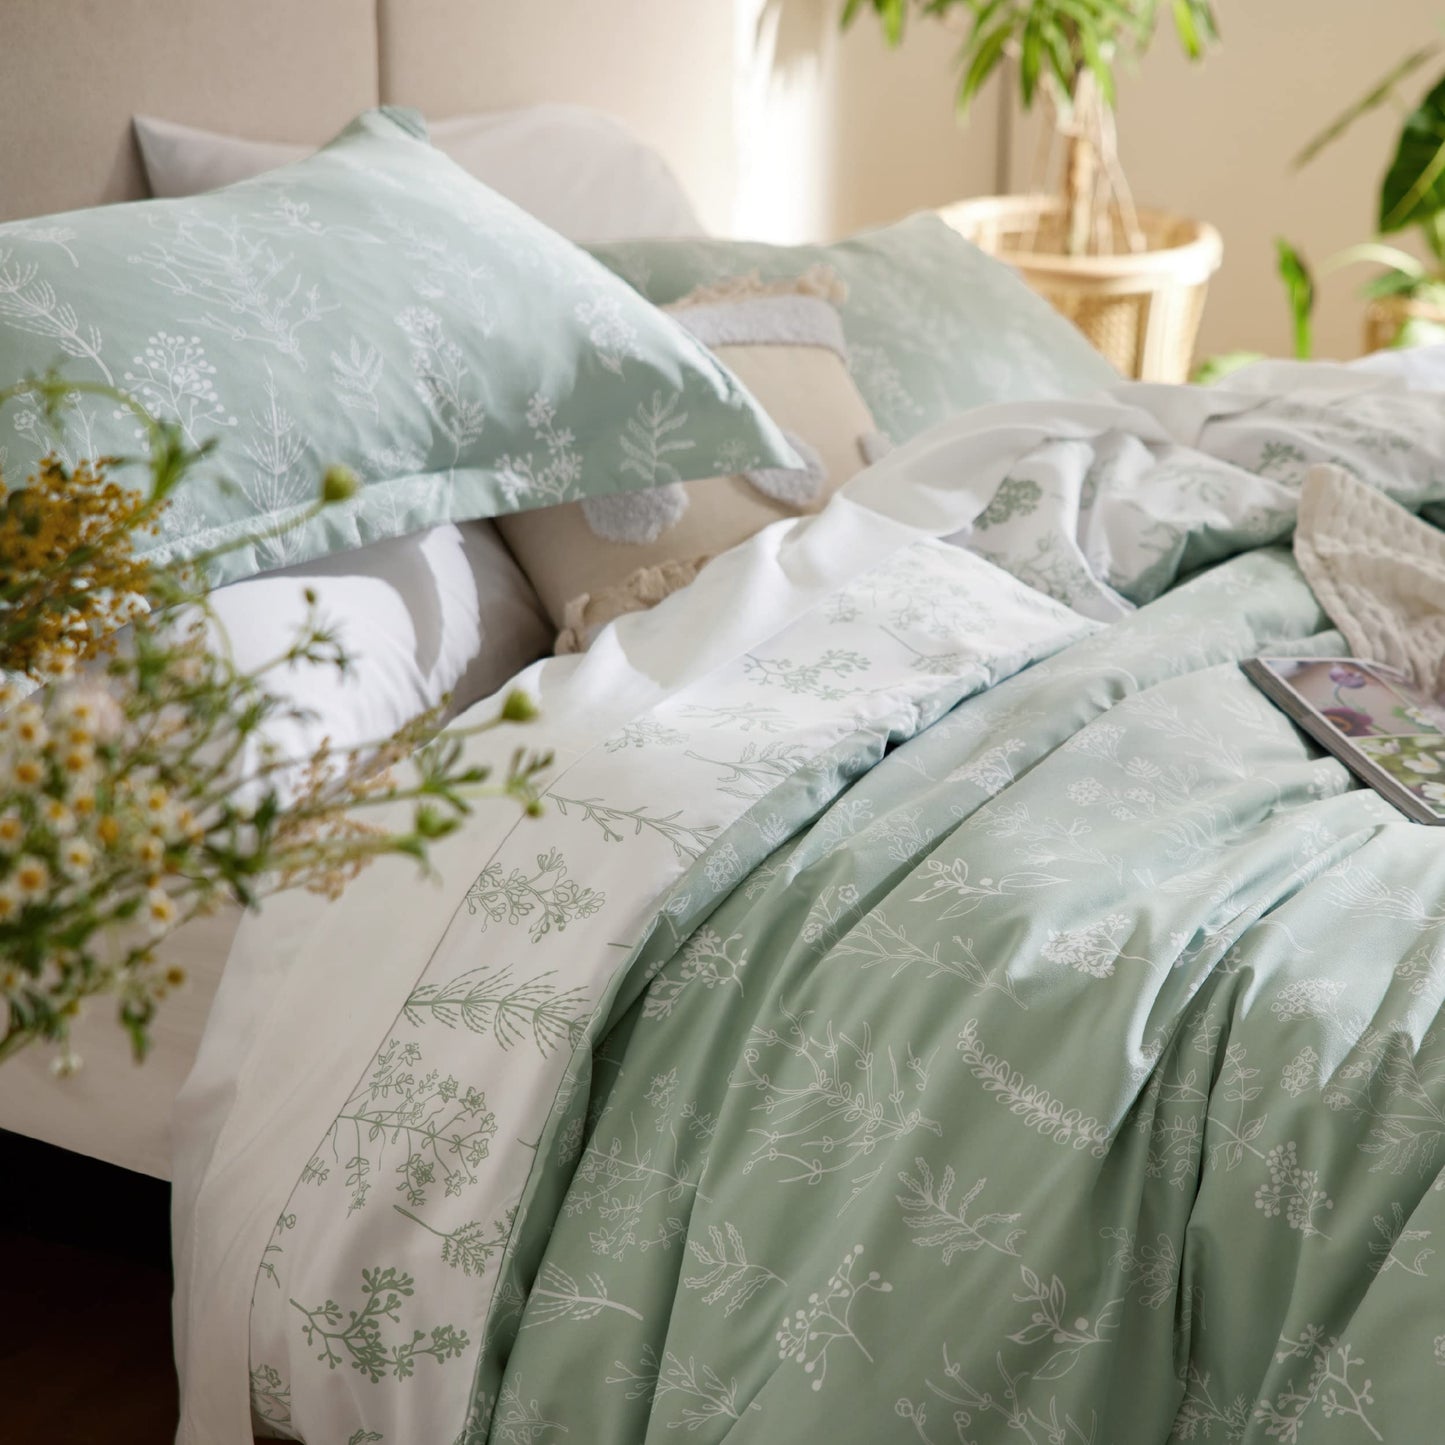 Bedsure Queen Comforter Set - Sage Green Comforter, Cute Floral Bedding Comforter Sets, 3 Pieces, 1 Soft Reversible Botanical Flowers Comforter and 2 Pillow Shams